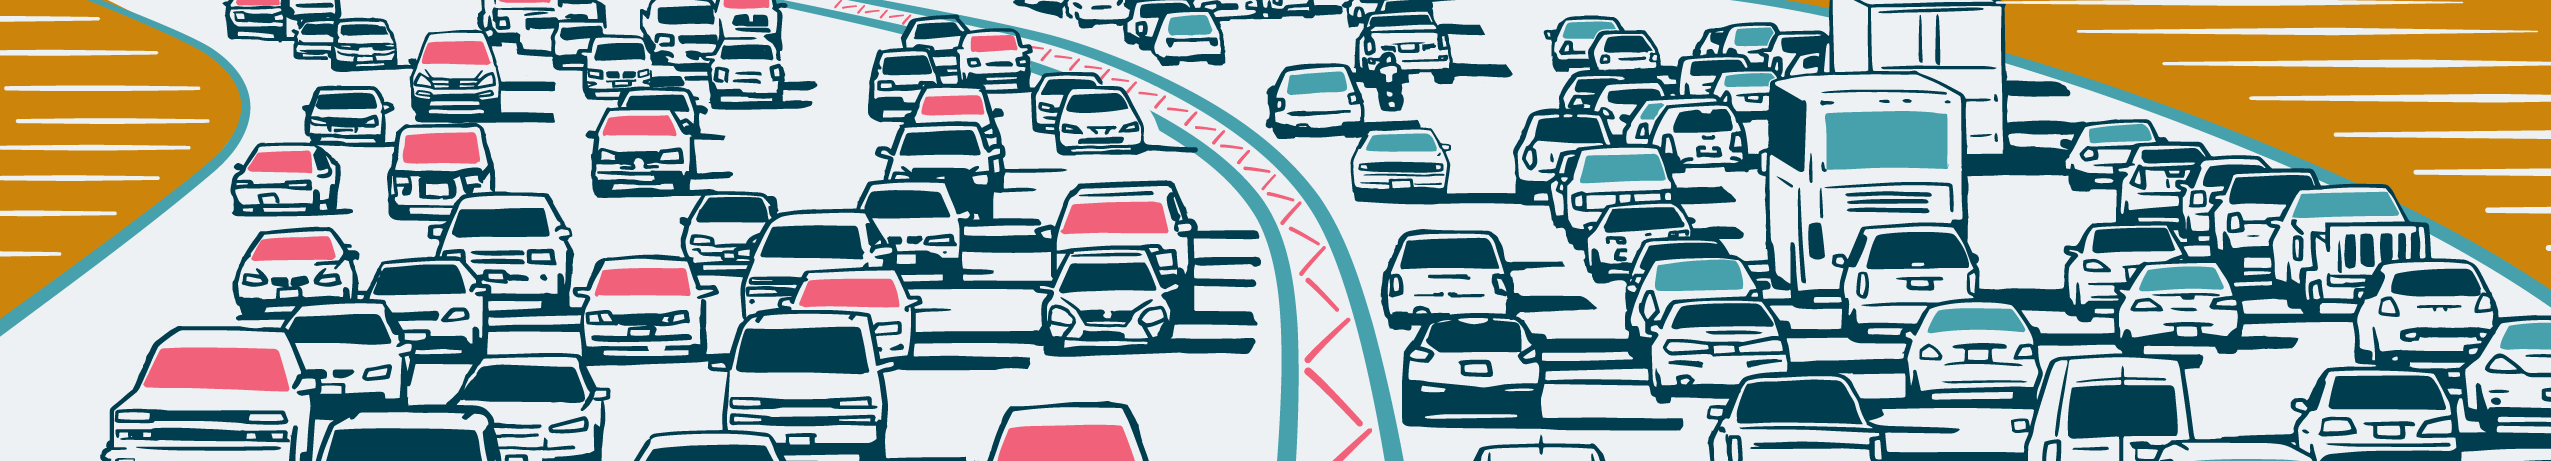 Illustration of cars on multiple lane road 